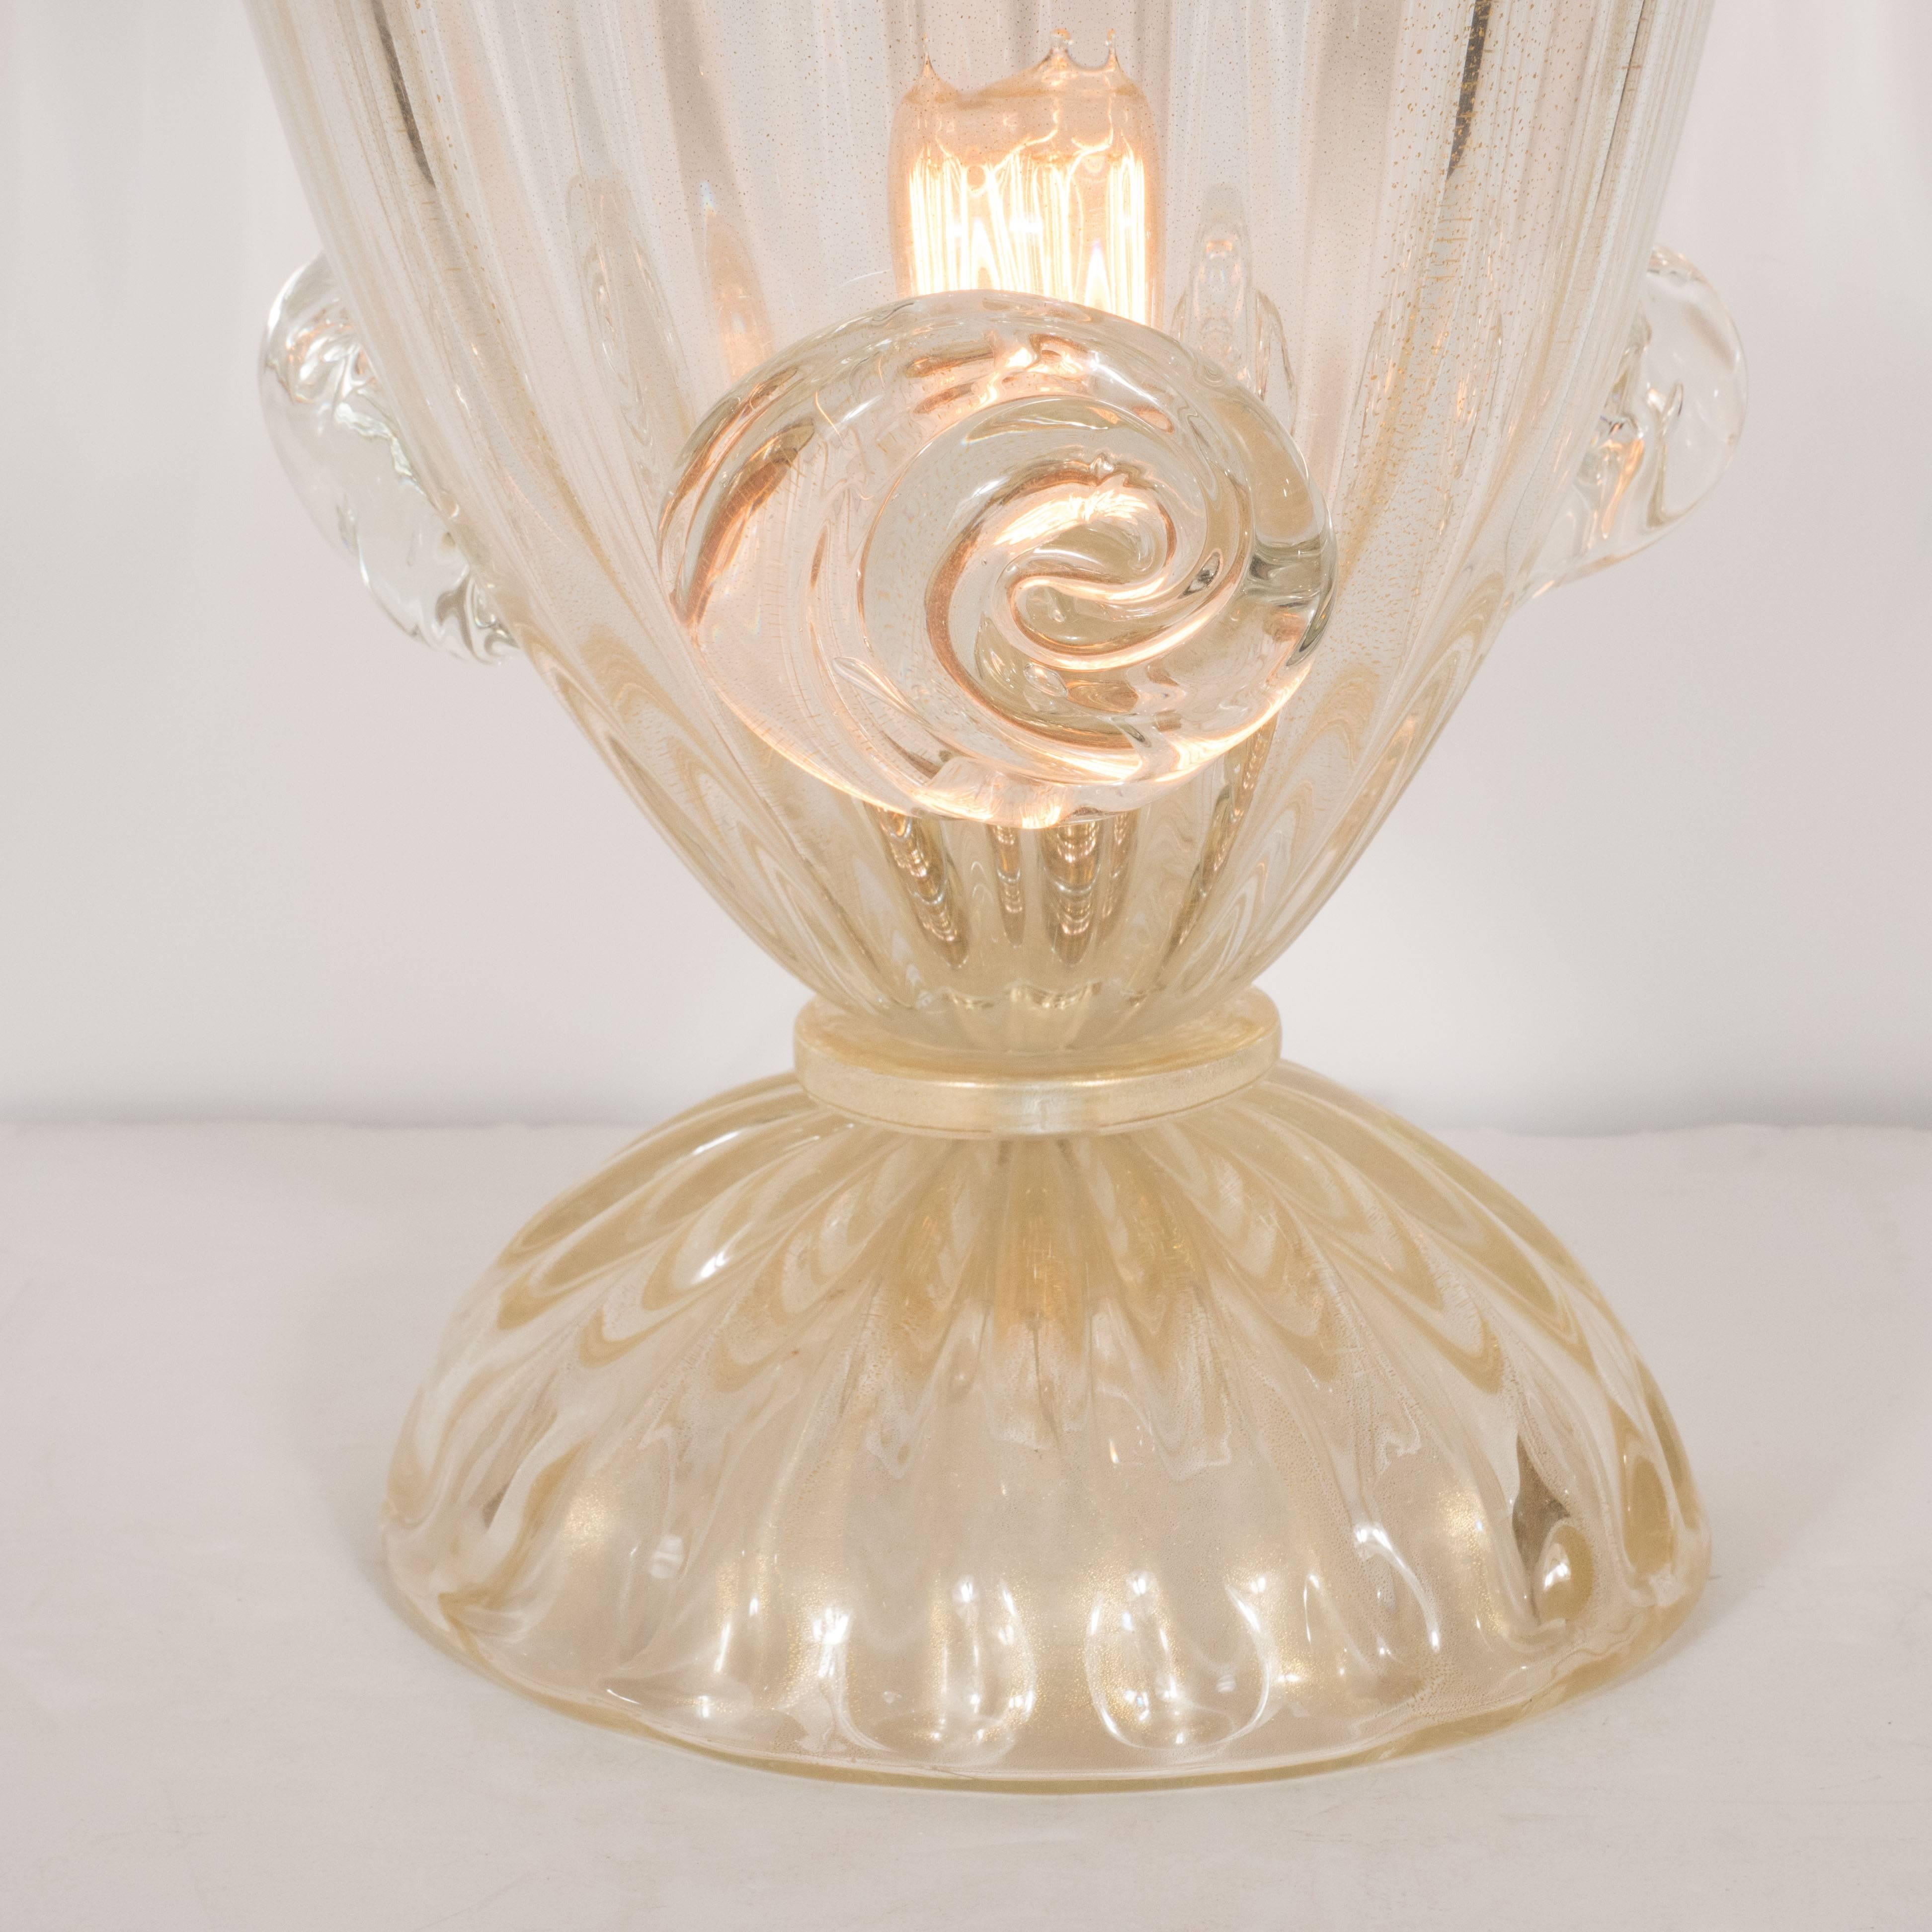 Italian Exquisite Pair of Art Deco Murano Venetian Glass Up-Lights with 24K Gold Flecks